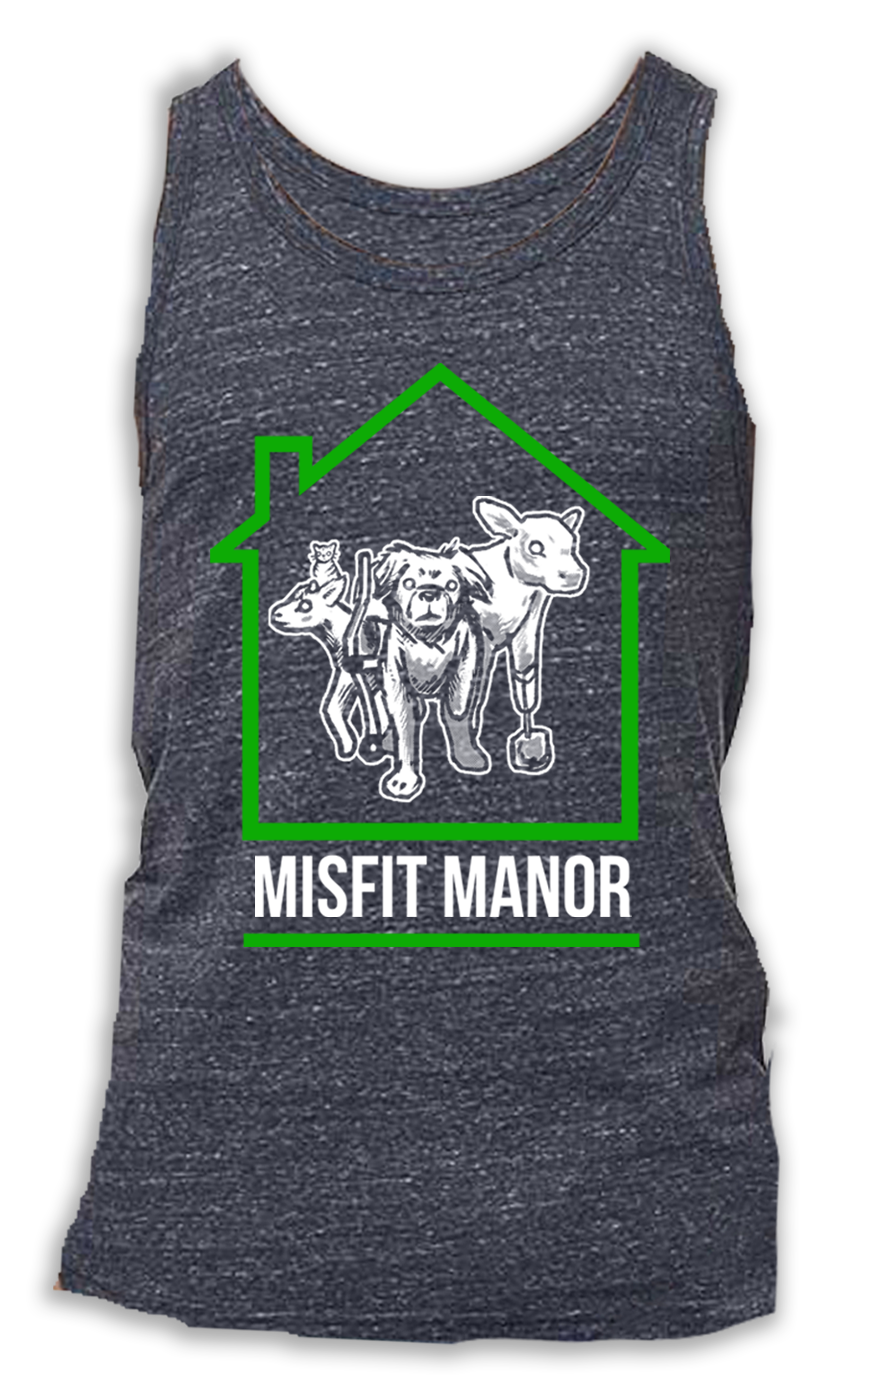 Misfit Manor - logo tank